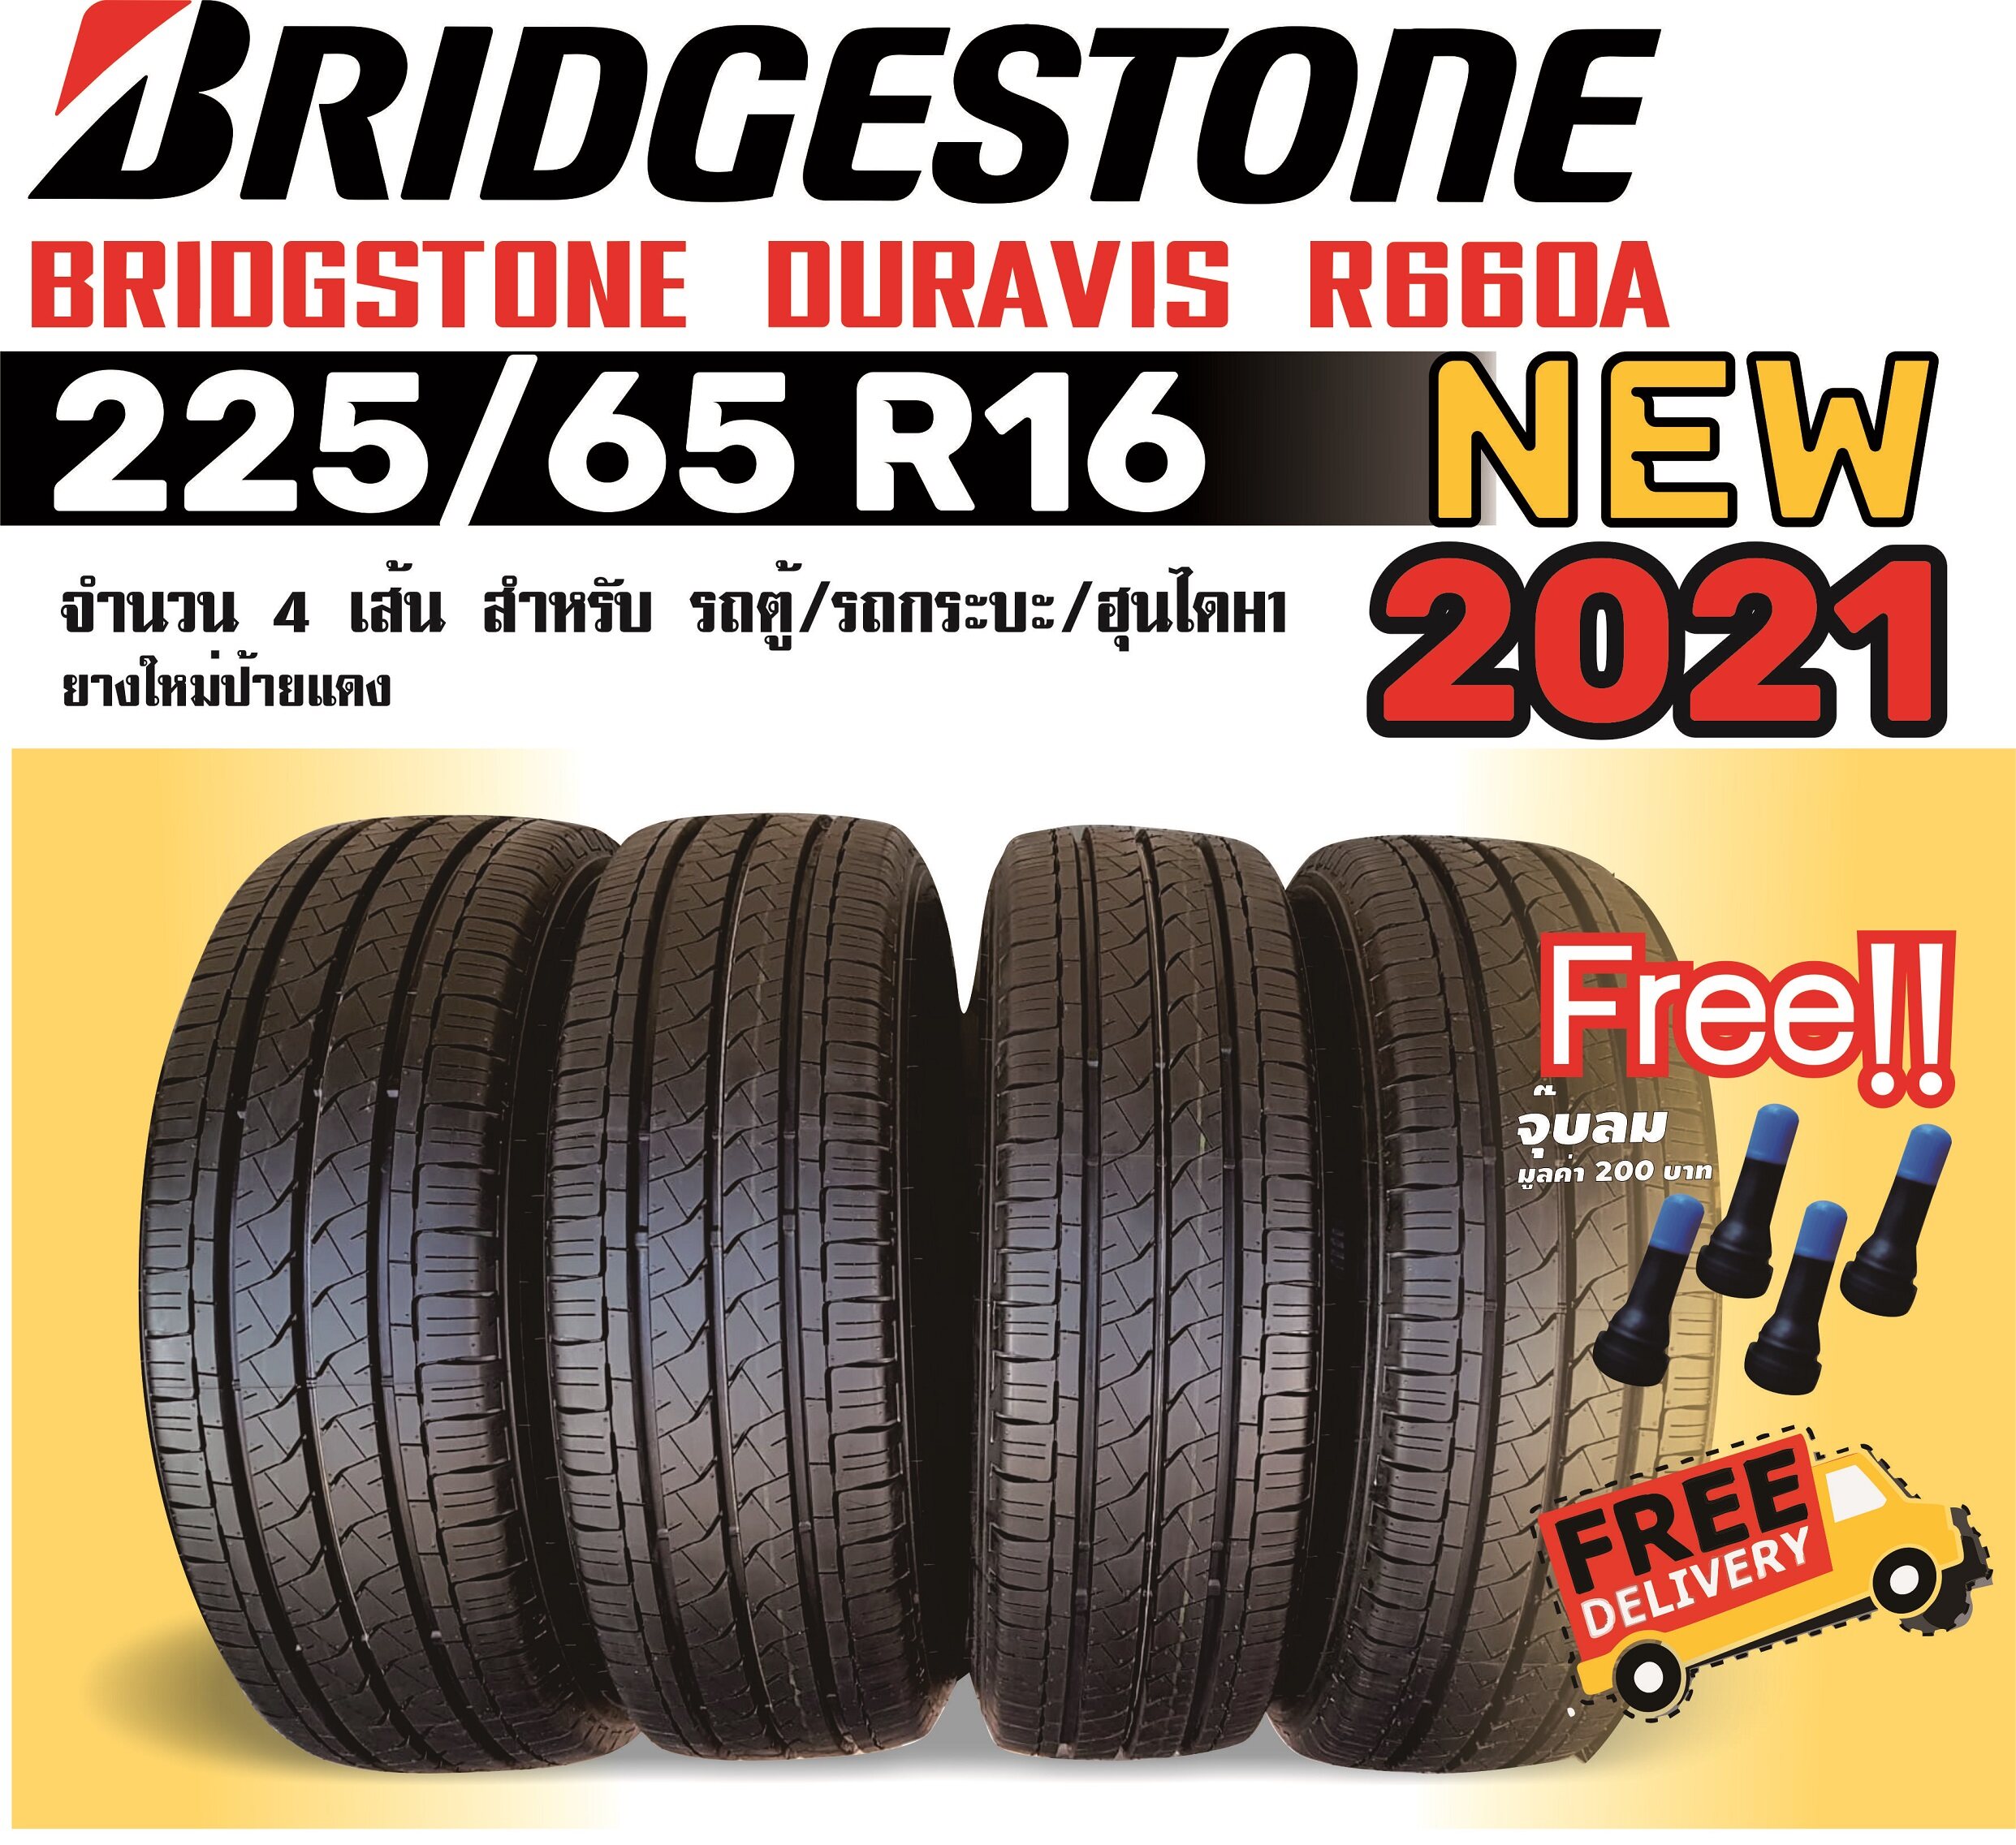 225/65R16  [จัดส่งฟรี] Bridgestone DURAVIS R660A ปี21 ยางใหม่ป้ายแดงถอดโชว์รูม จำนวน 4 เส้น/1ชุด +++ฟรีจุ๊บยางใหม่+++